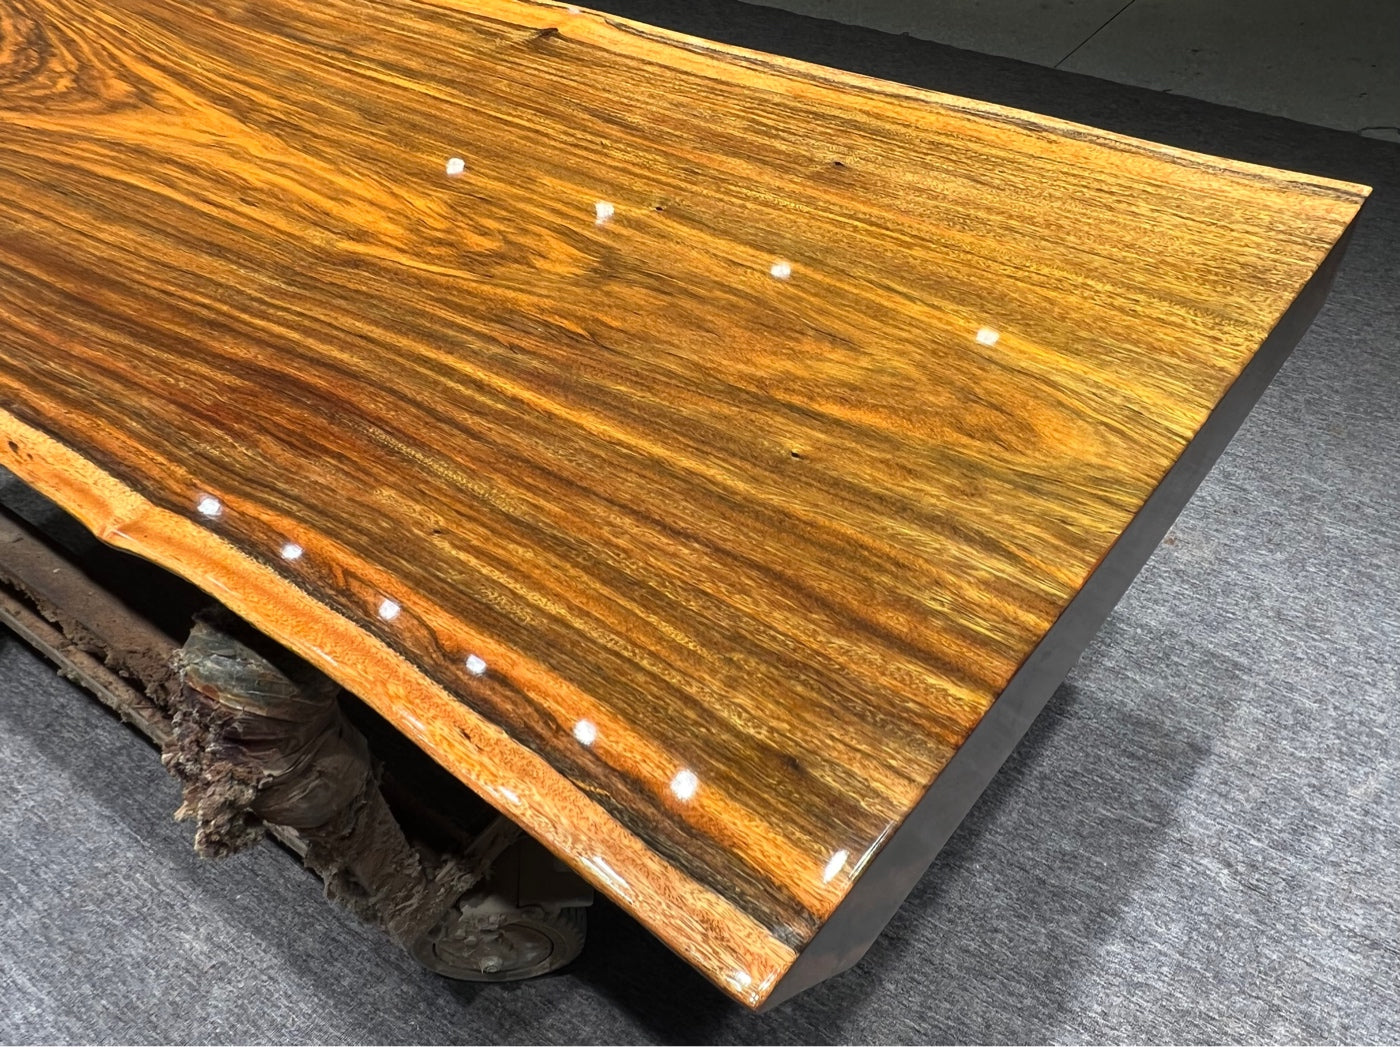 <tc>Tali wood</tc> tavolo lastra di legno, tavolo lastra di legno Africa rotondo, tavolo lastra canale c